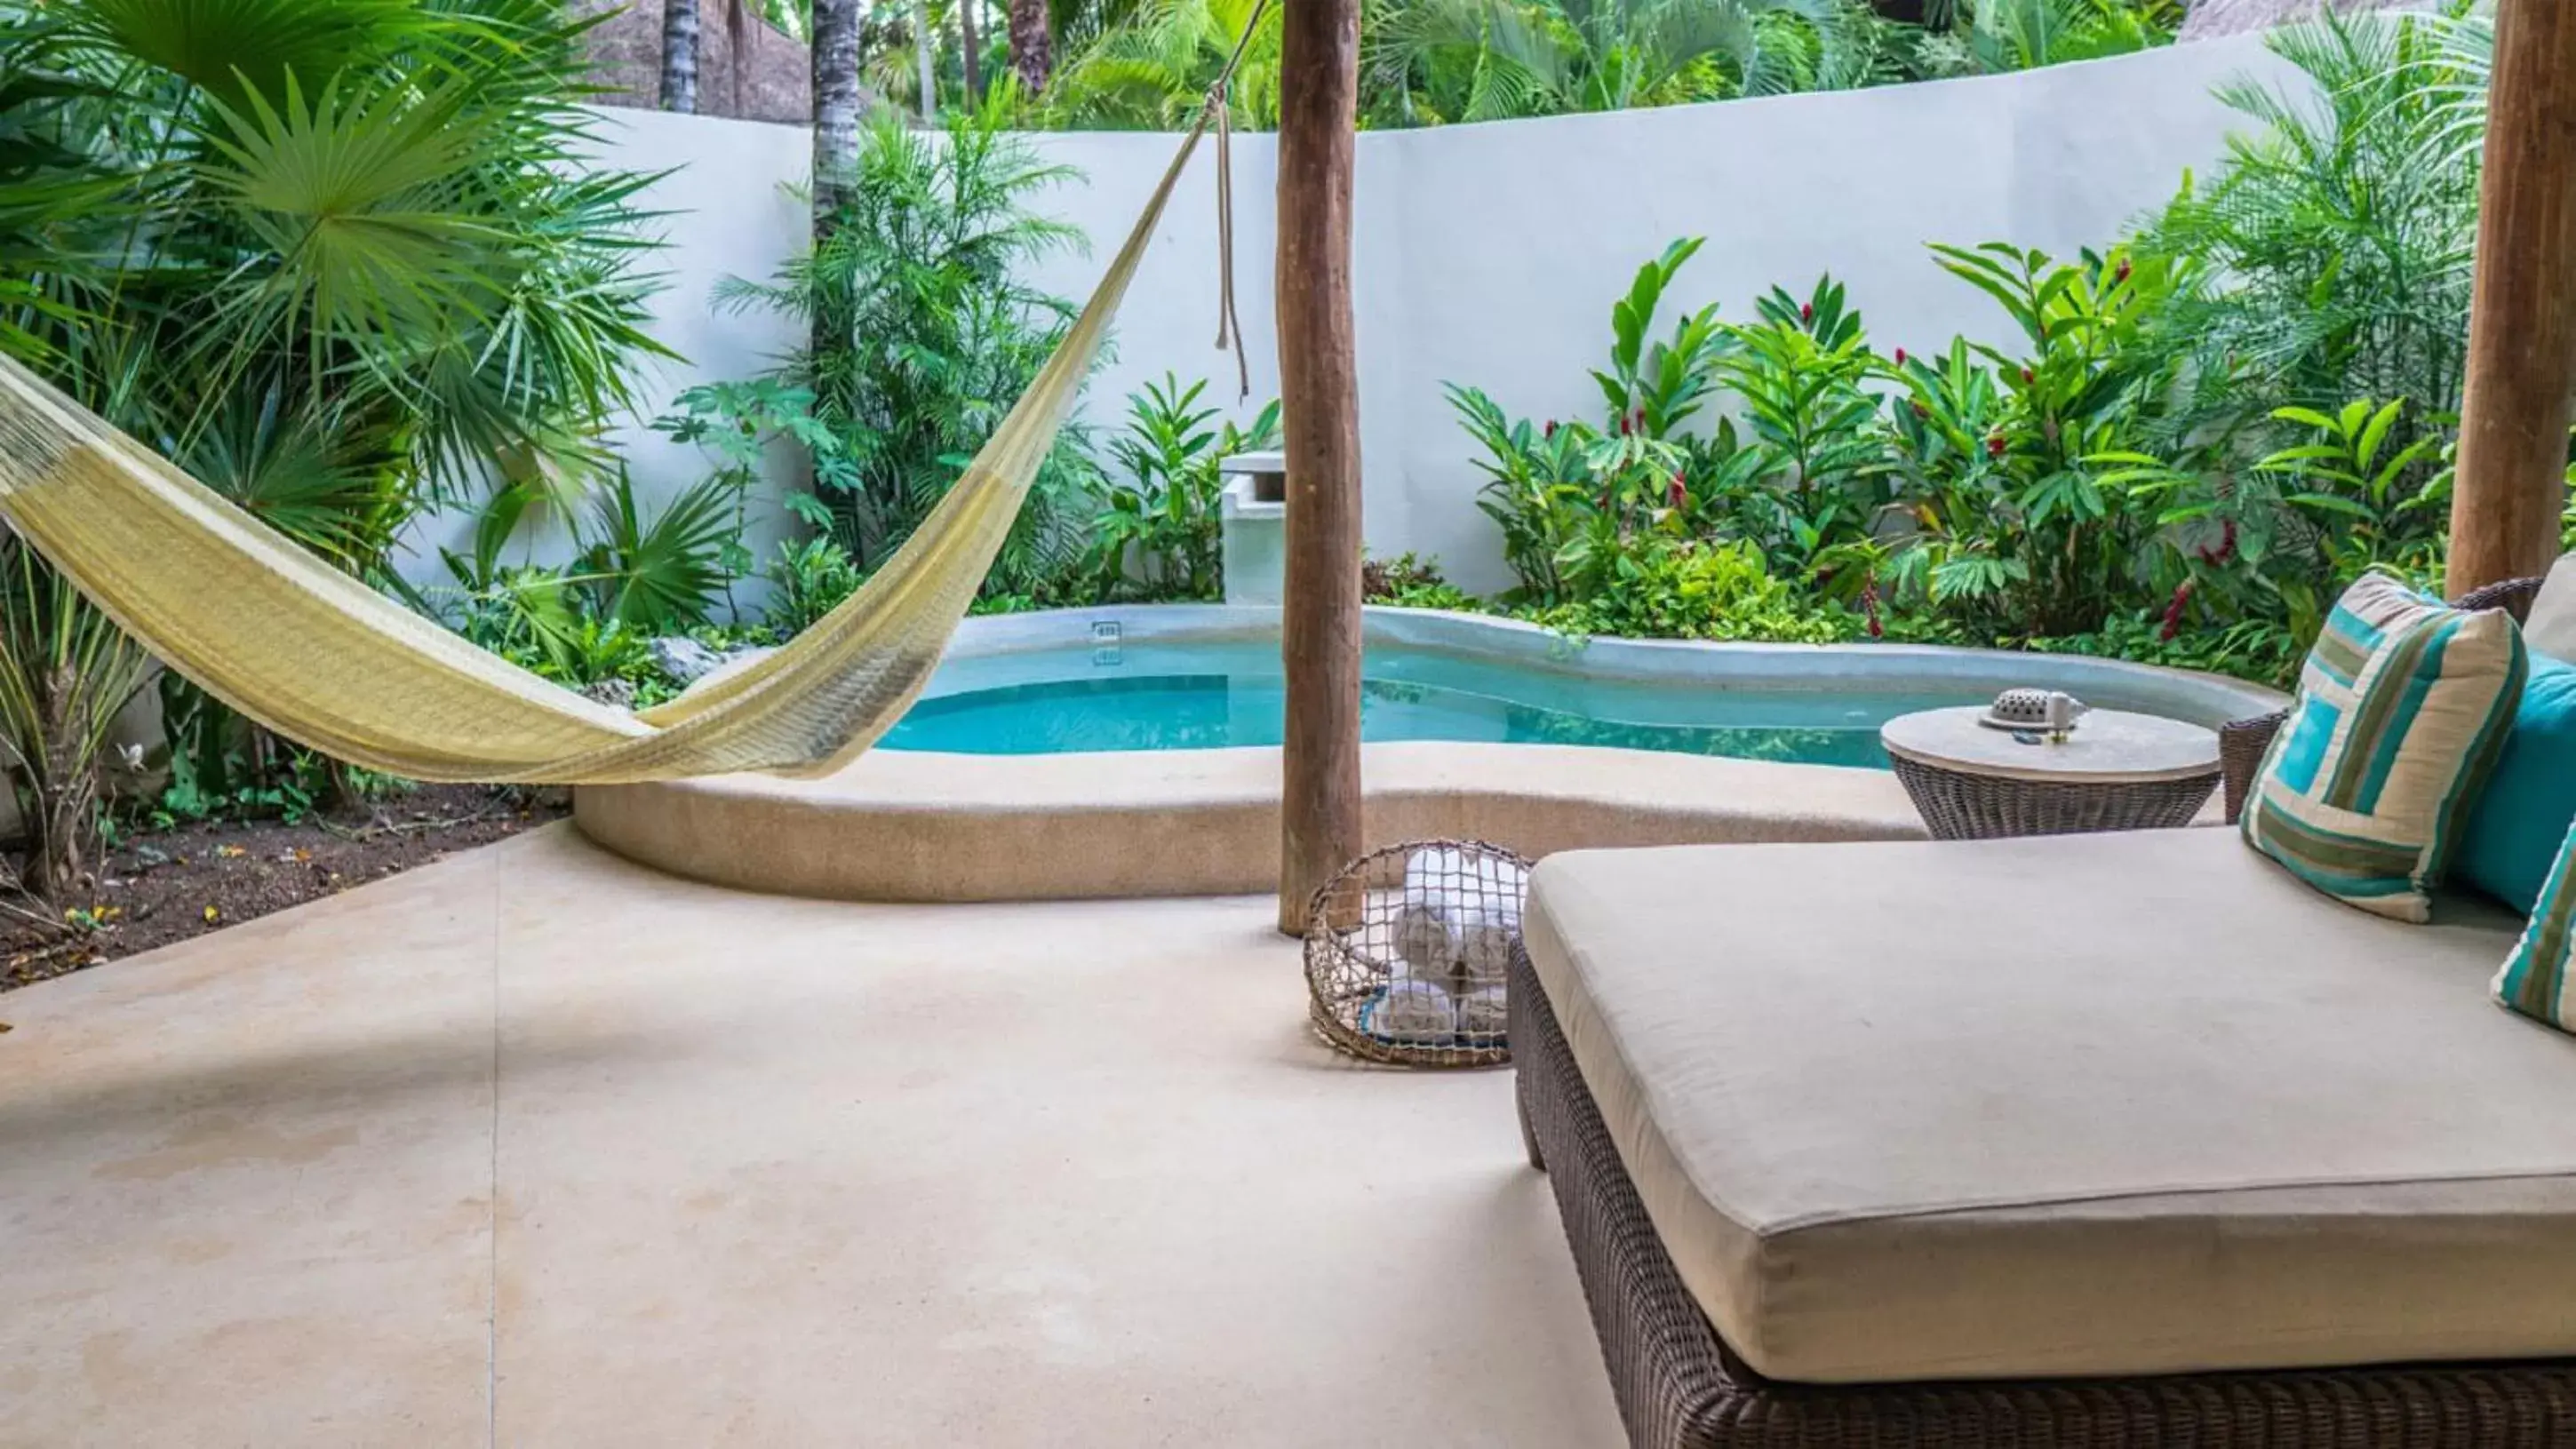 Balcony/Terrace, Swimming Pool in Viceroy Riviera Maya, a Luxury Villa Resort